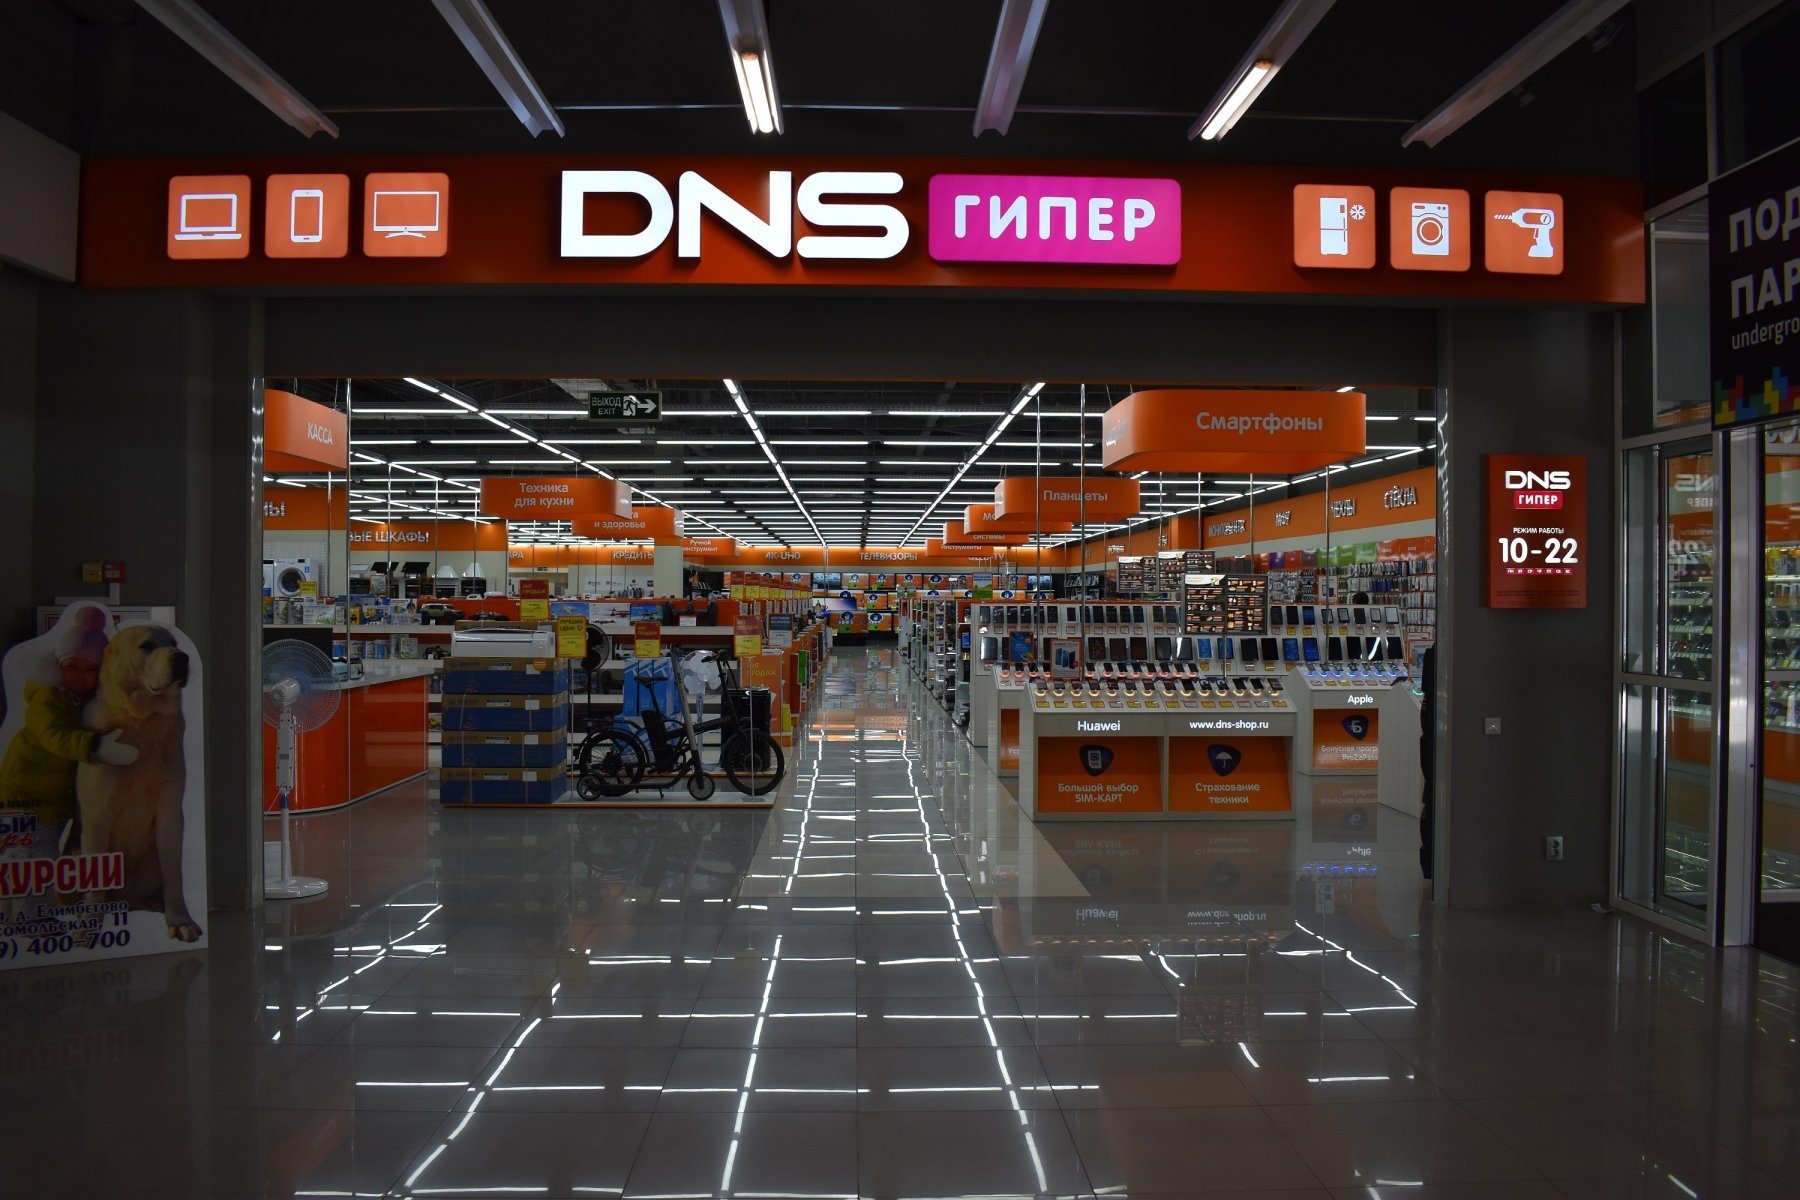 Днс красновишерск. ДНС Планерная. DNS 1998. ДНС супермаркет цифровой техники. ЛНС.